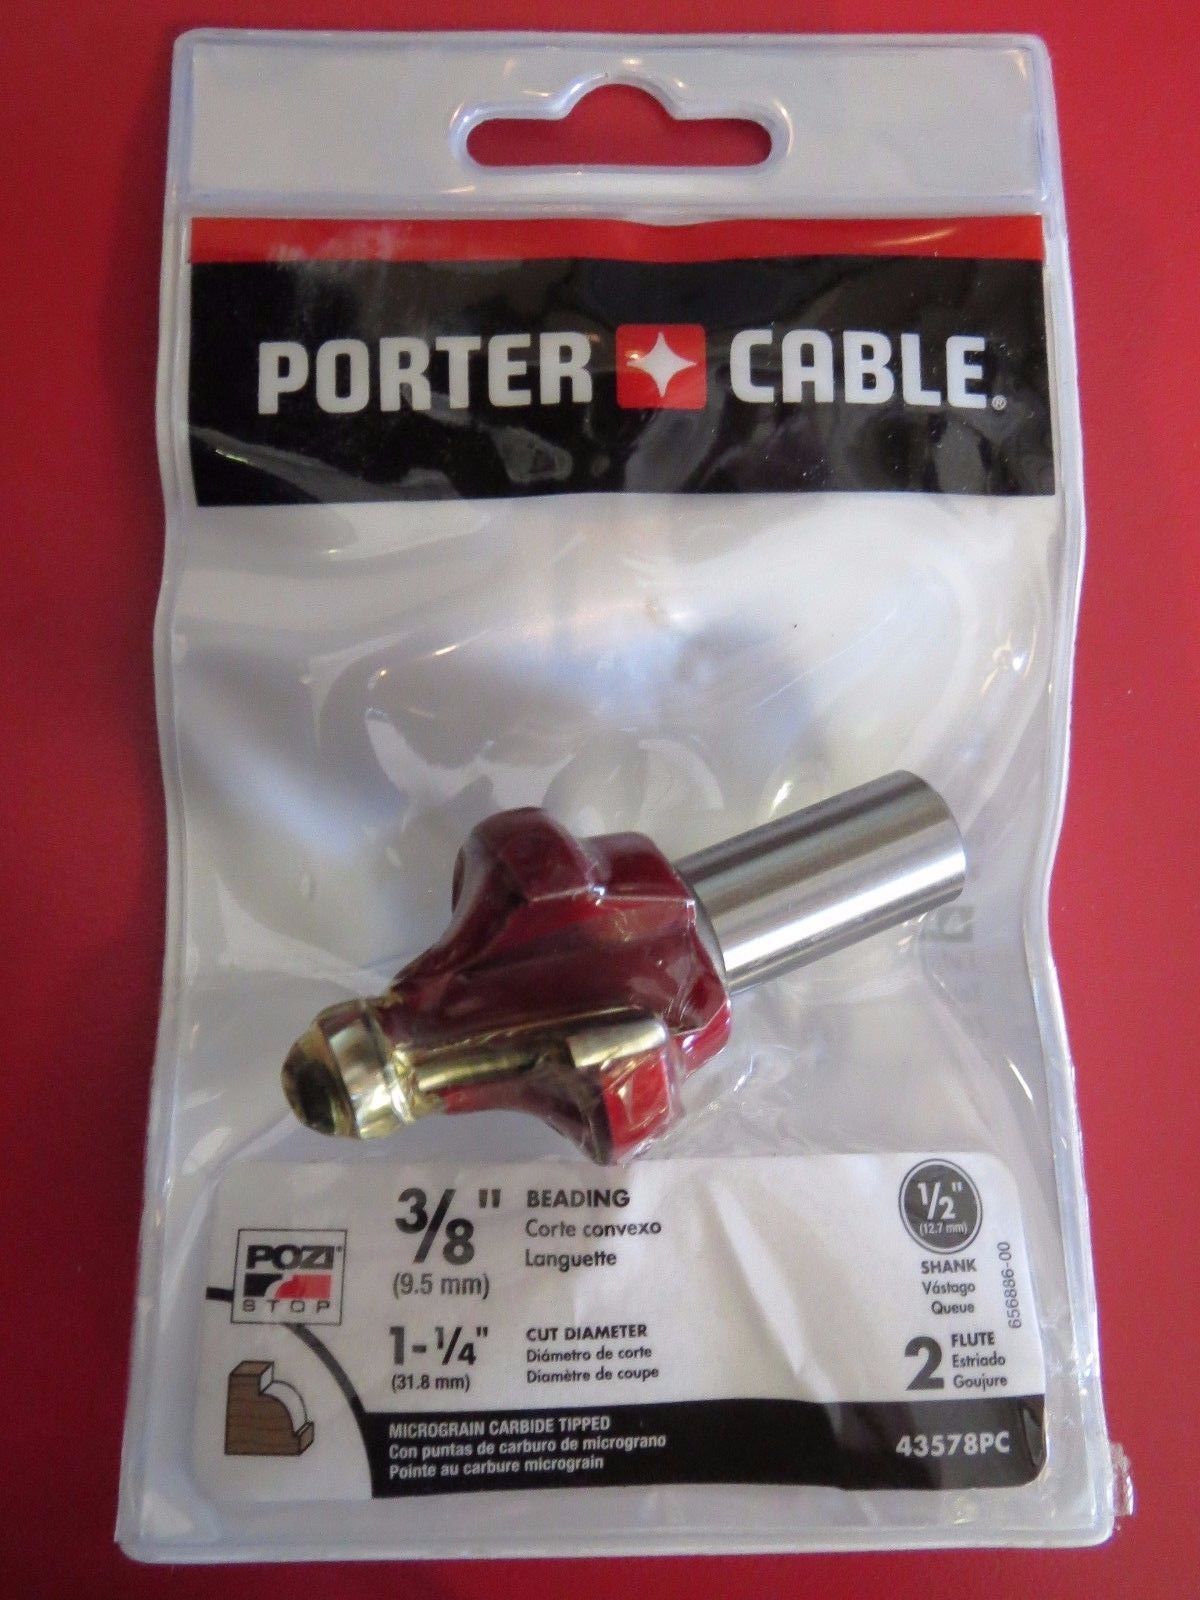 Porter Cable 43578PC 3/8" Carbide Beading Router Bit 1/2" Shank